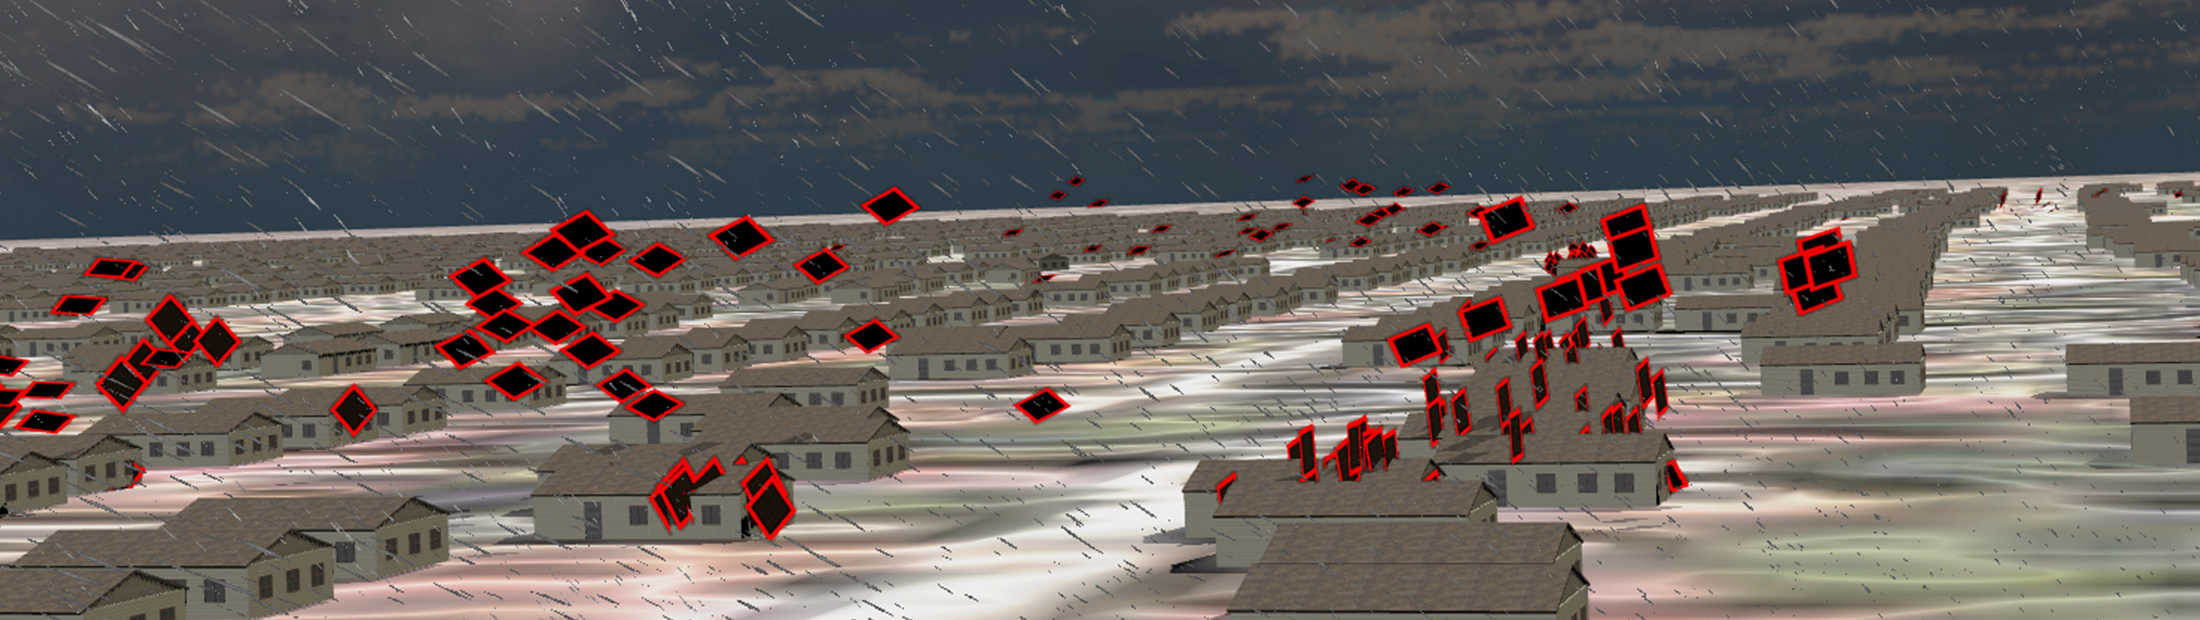 Featured image of hurricane simulation